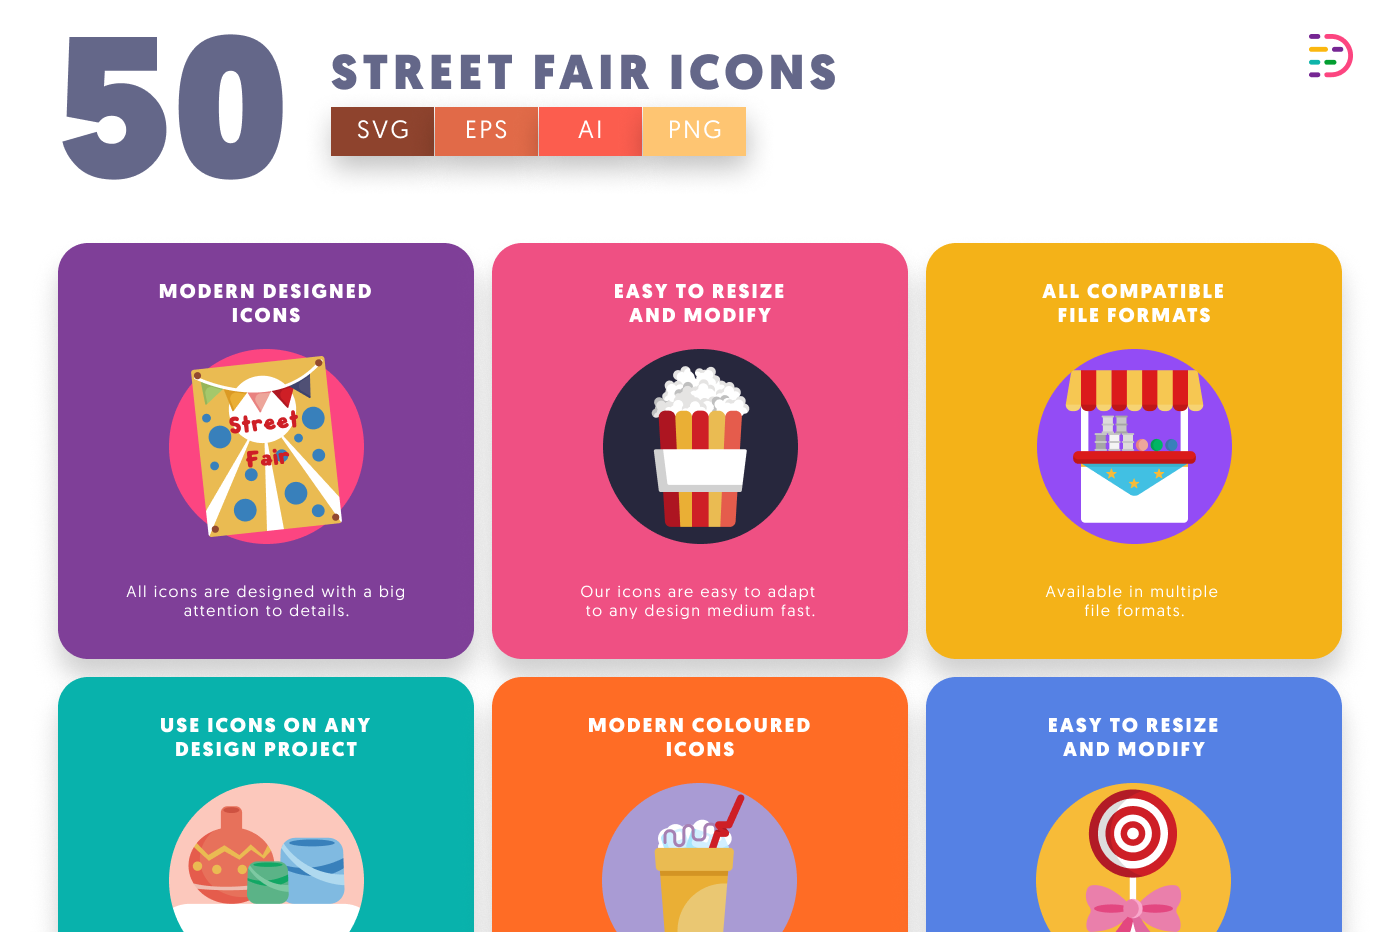 50-Street Fair-Icons